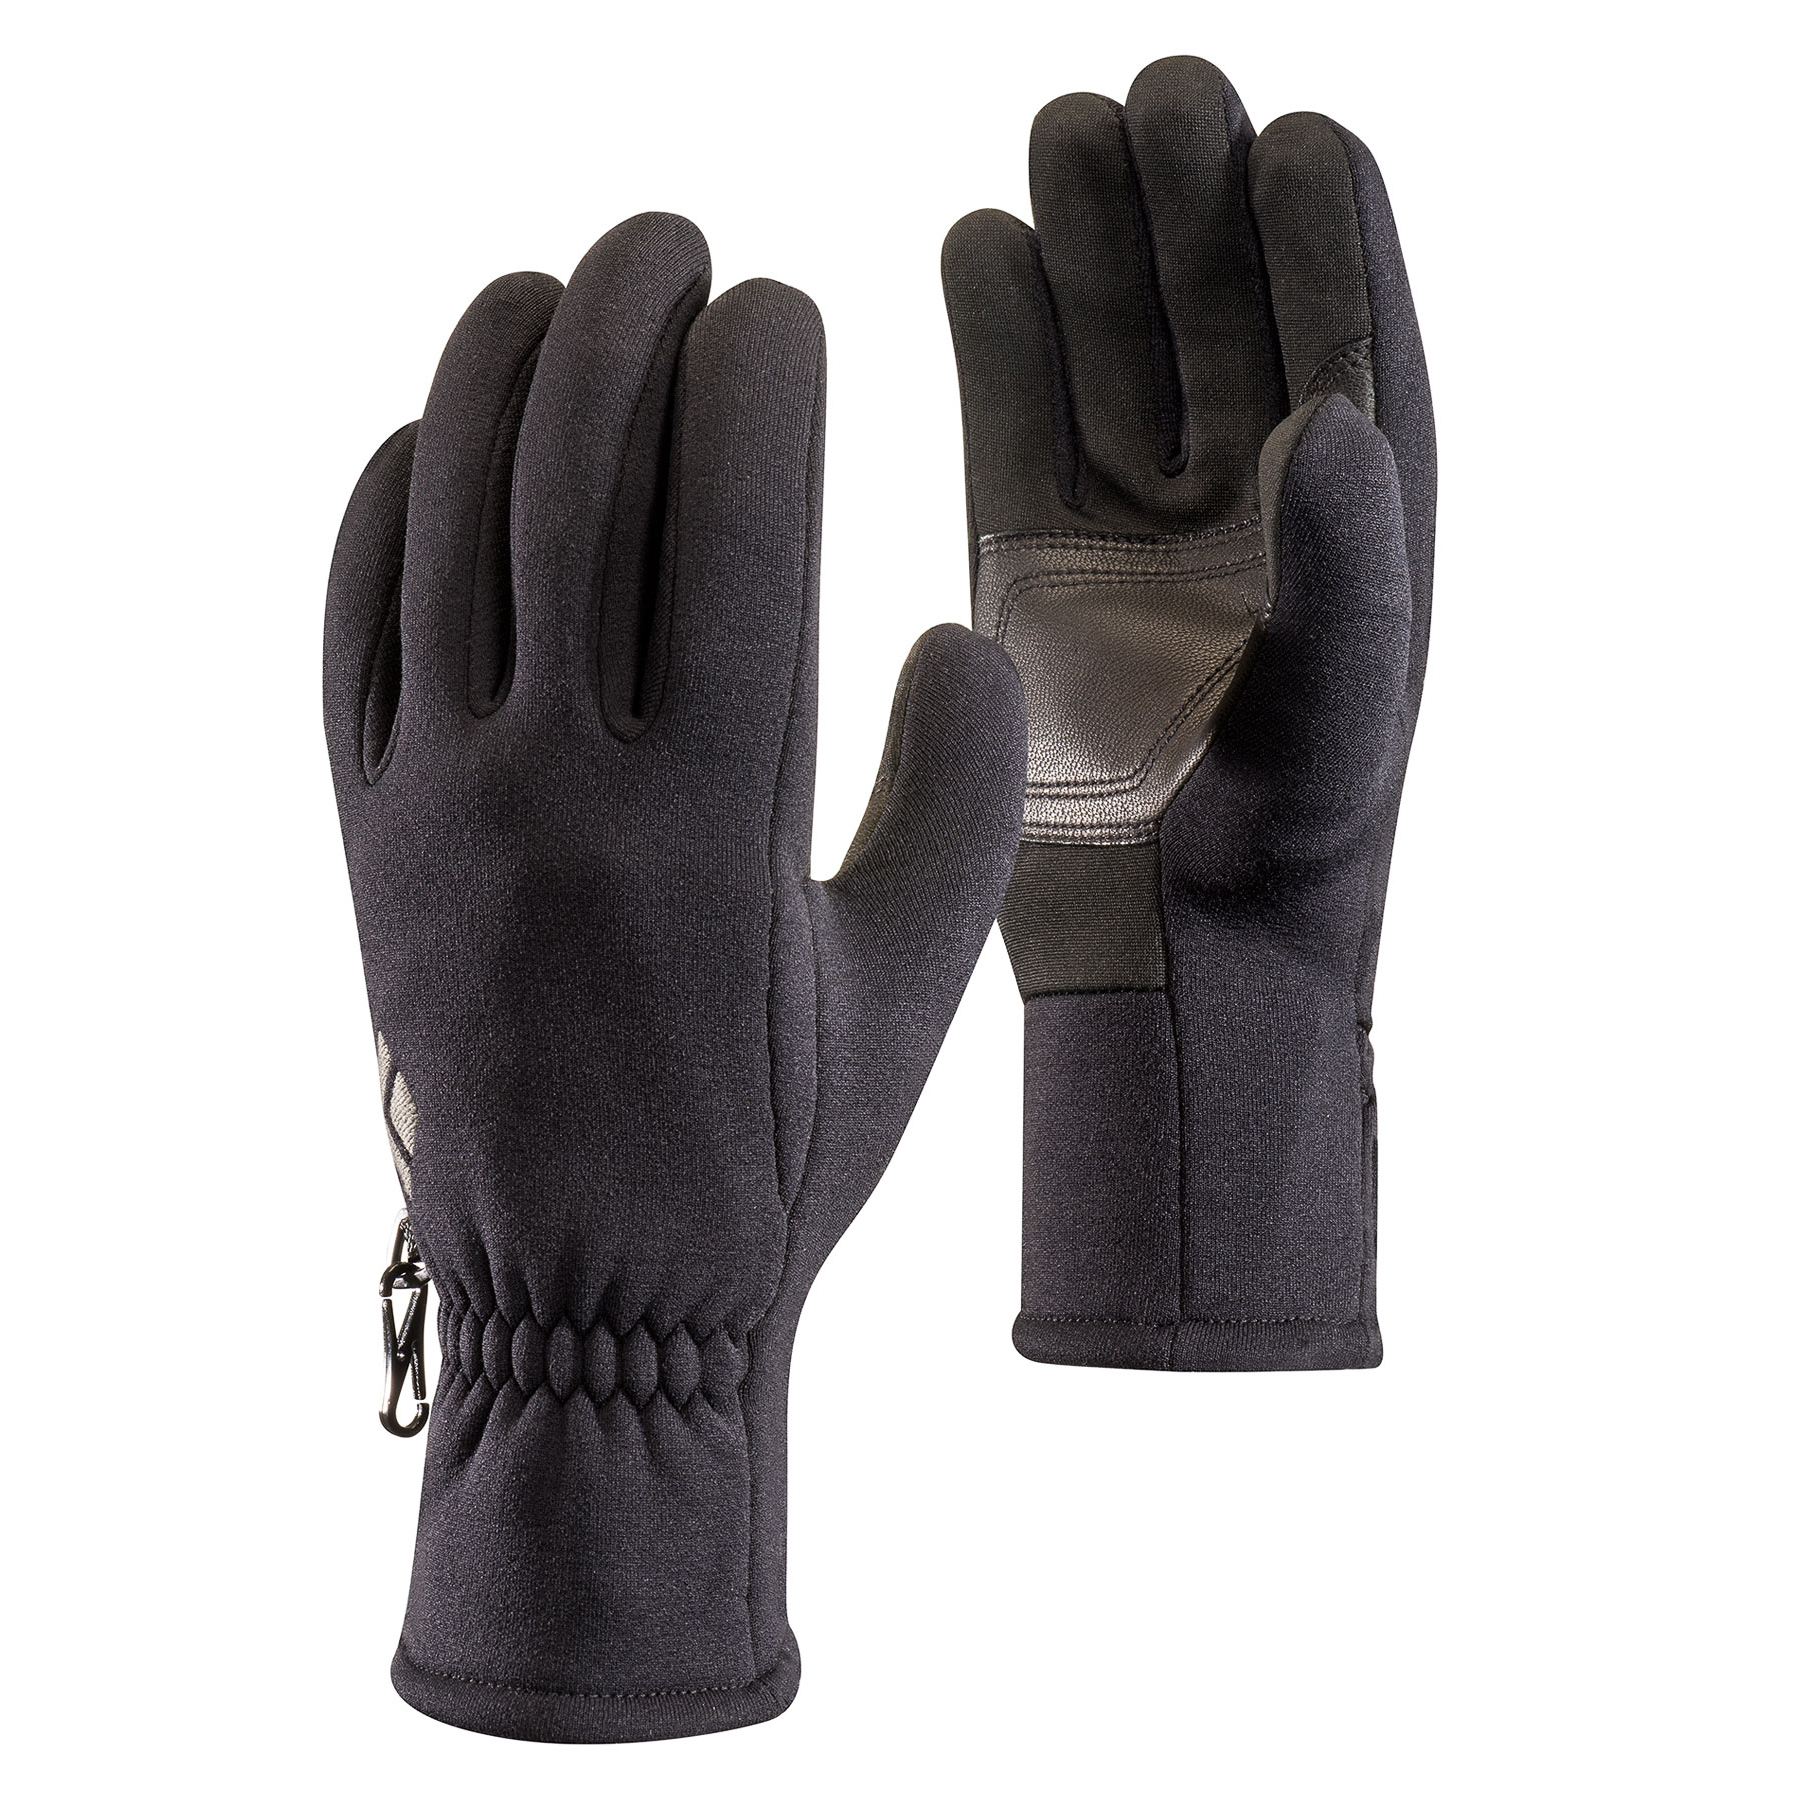 black lightweight screentap diamond gloves